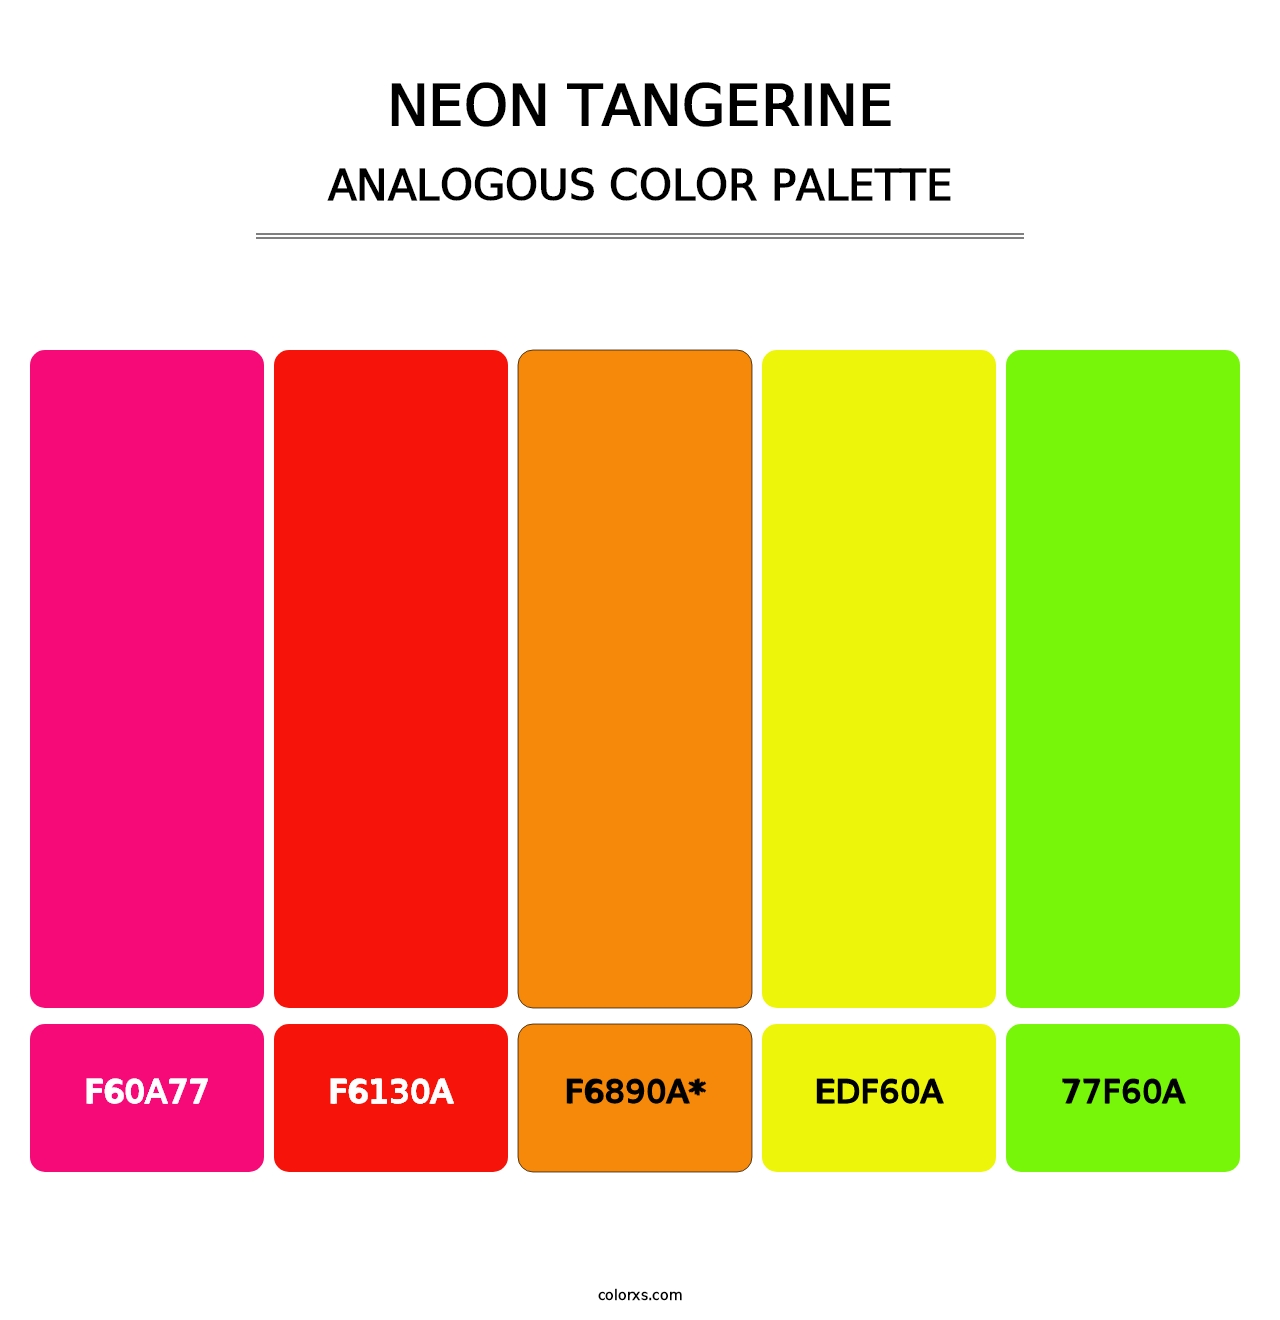 Neon Tangerine - Analogous Color Palette